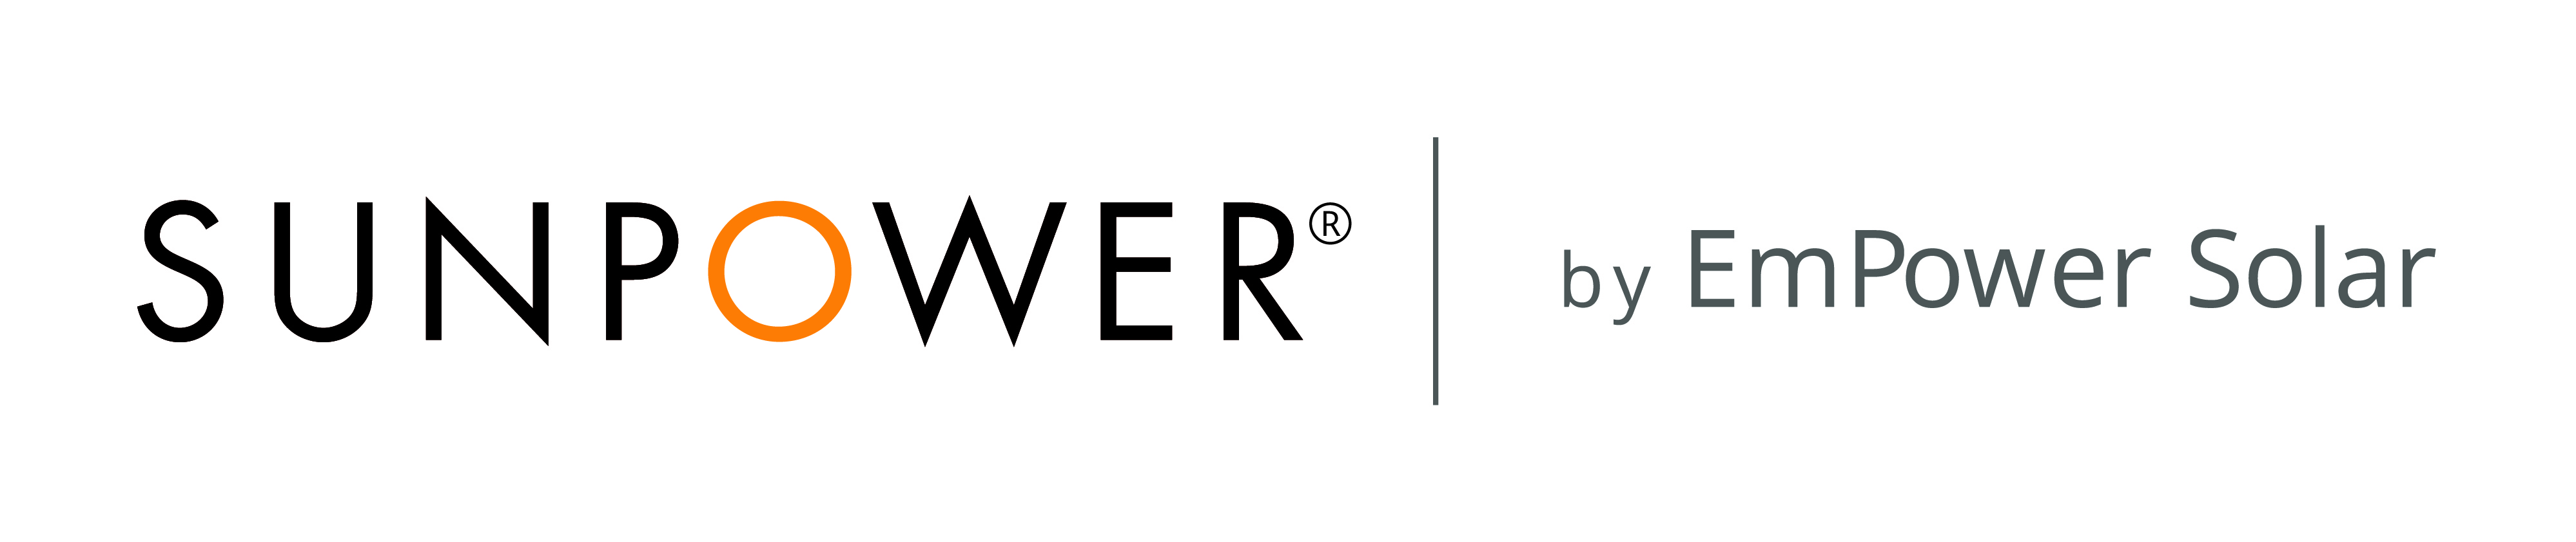  SunPower by EmPower Solar company logo